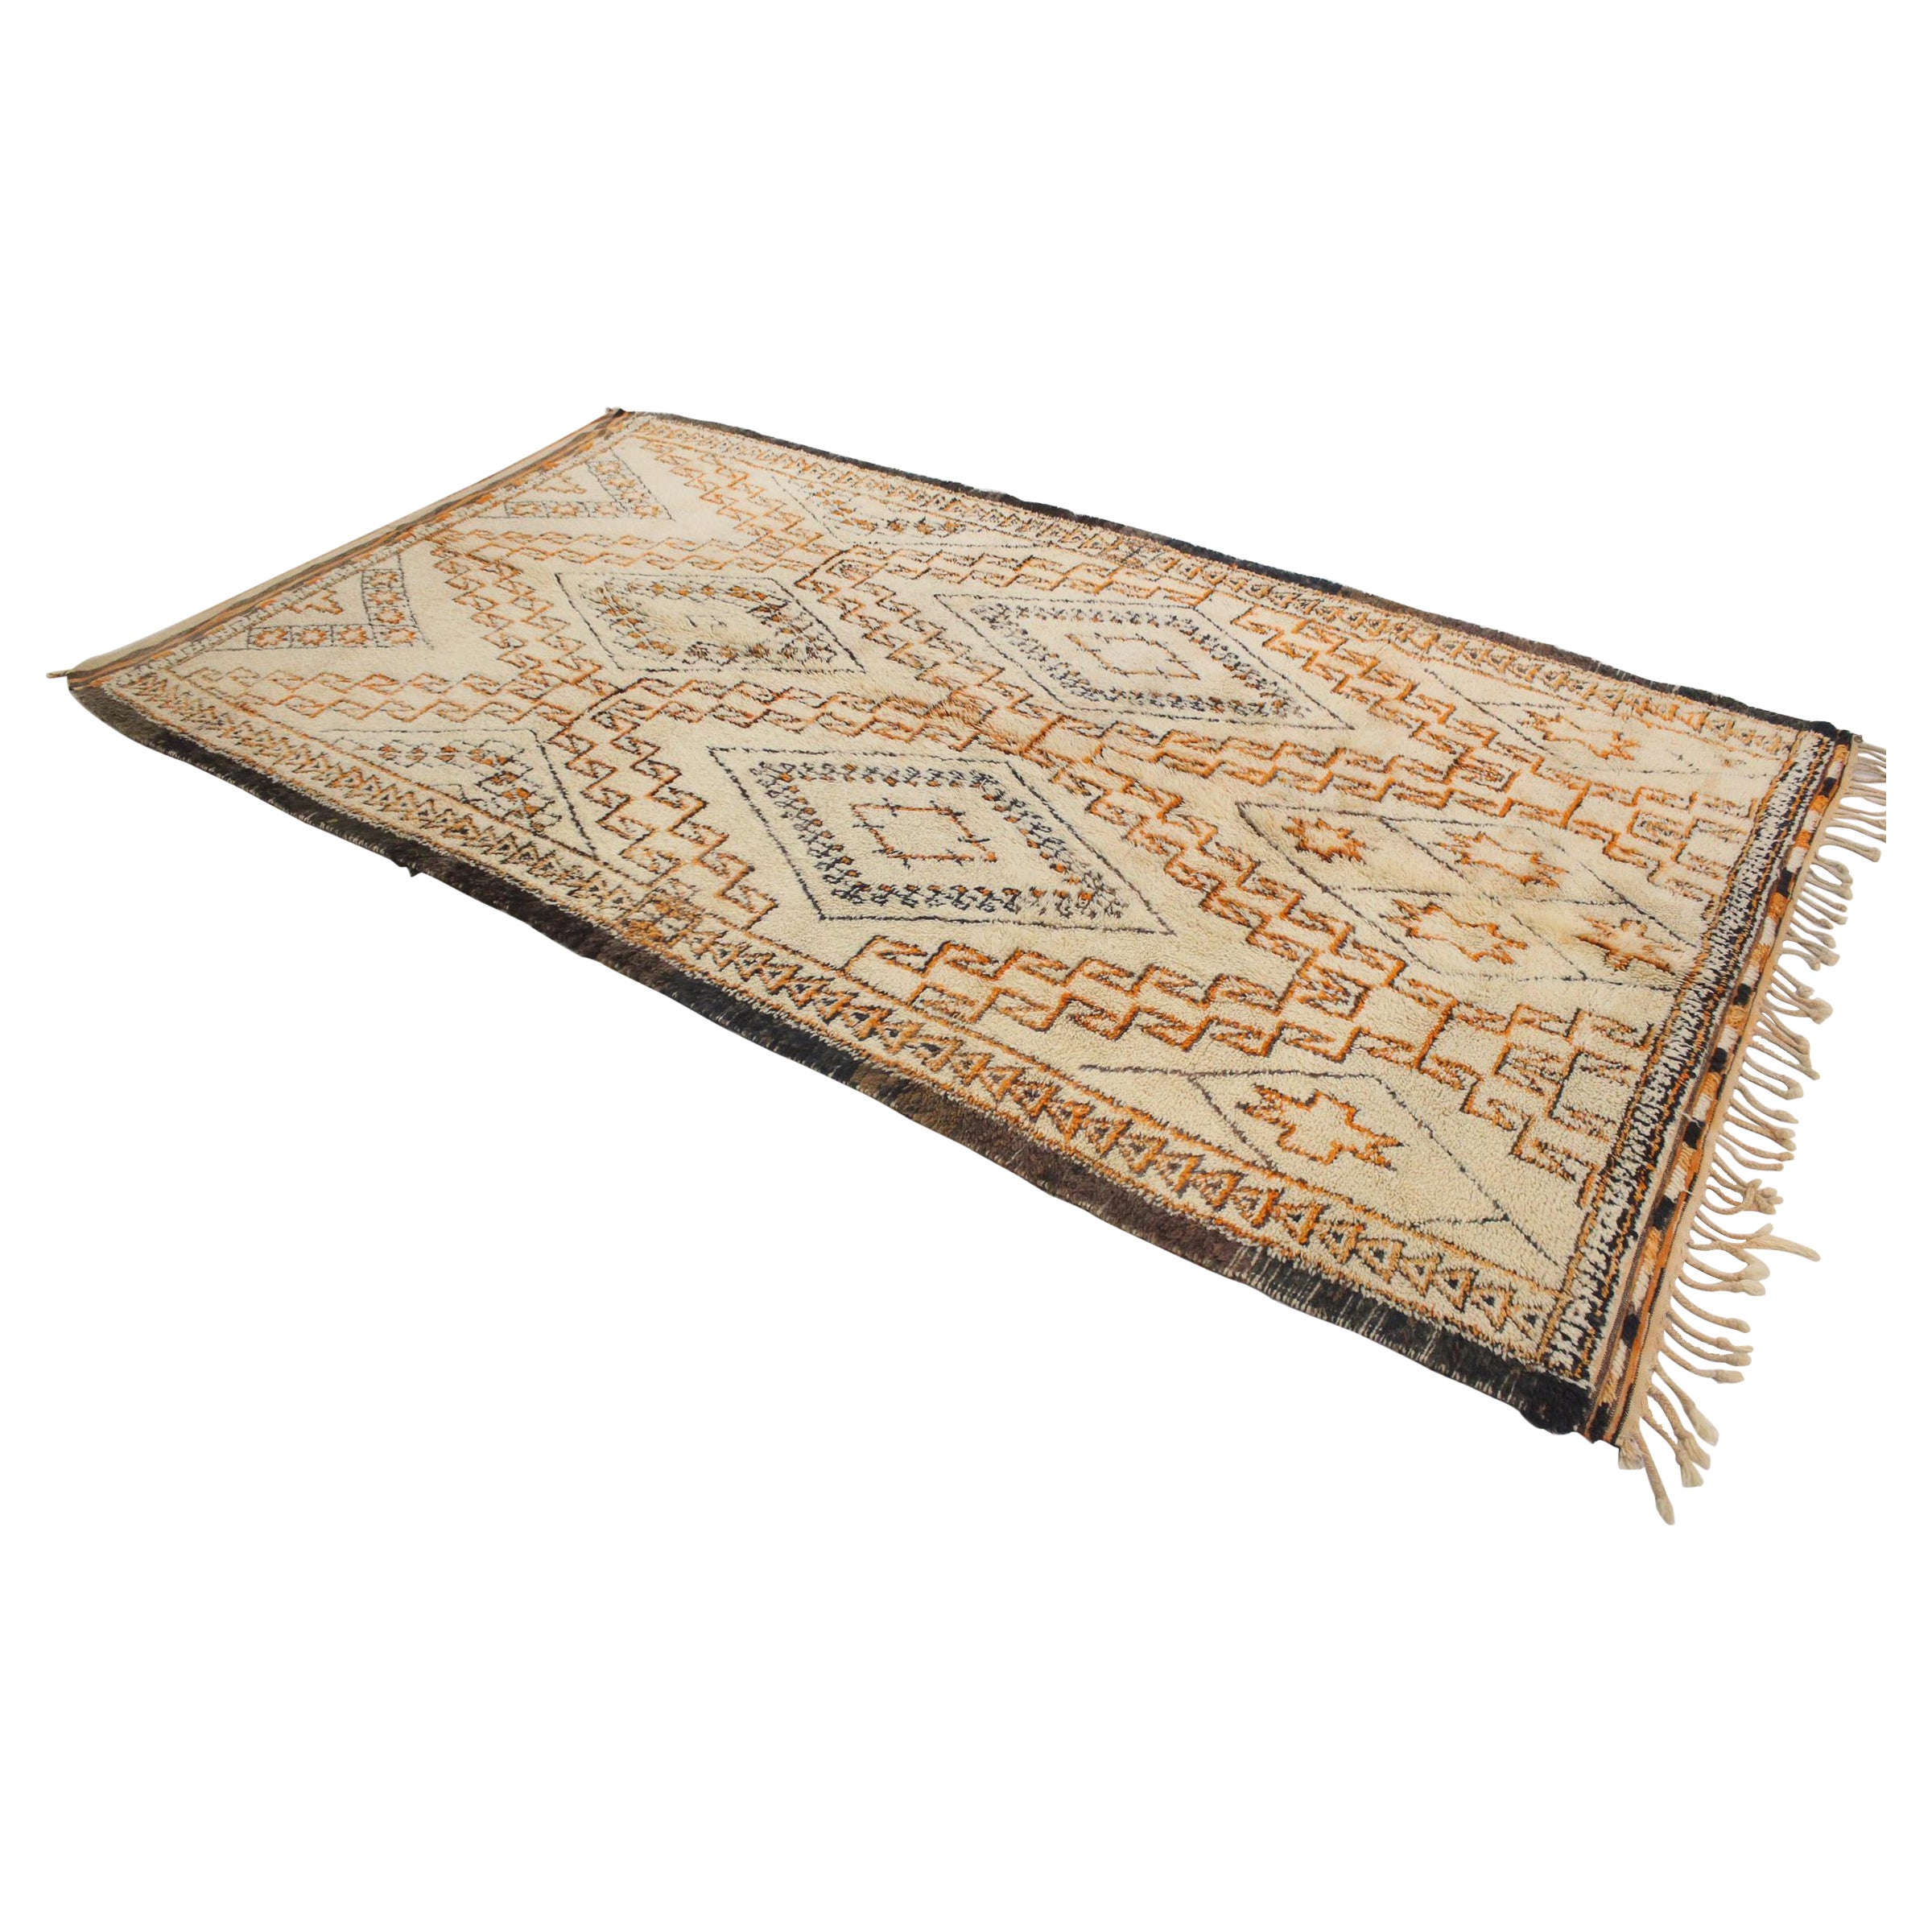 Vintage Moroccan Beni Ourain rug - Beige/orange - 6.2x11.1feet / 190x340cm For Sale